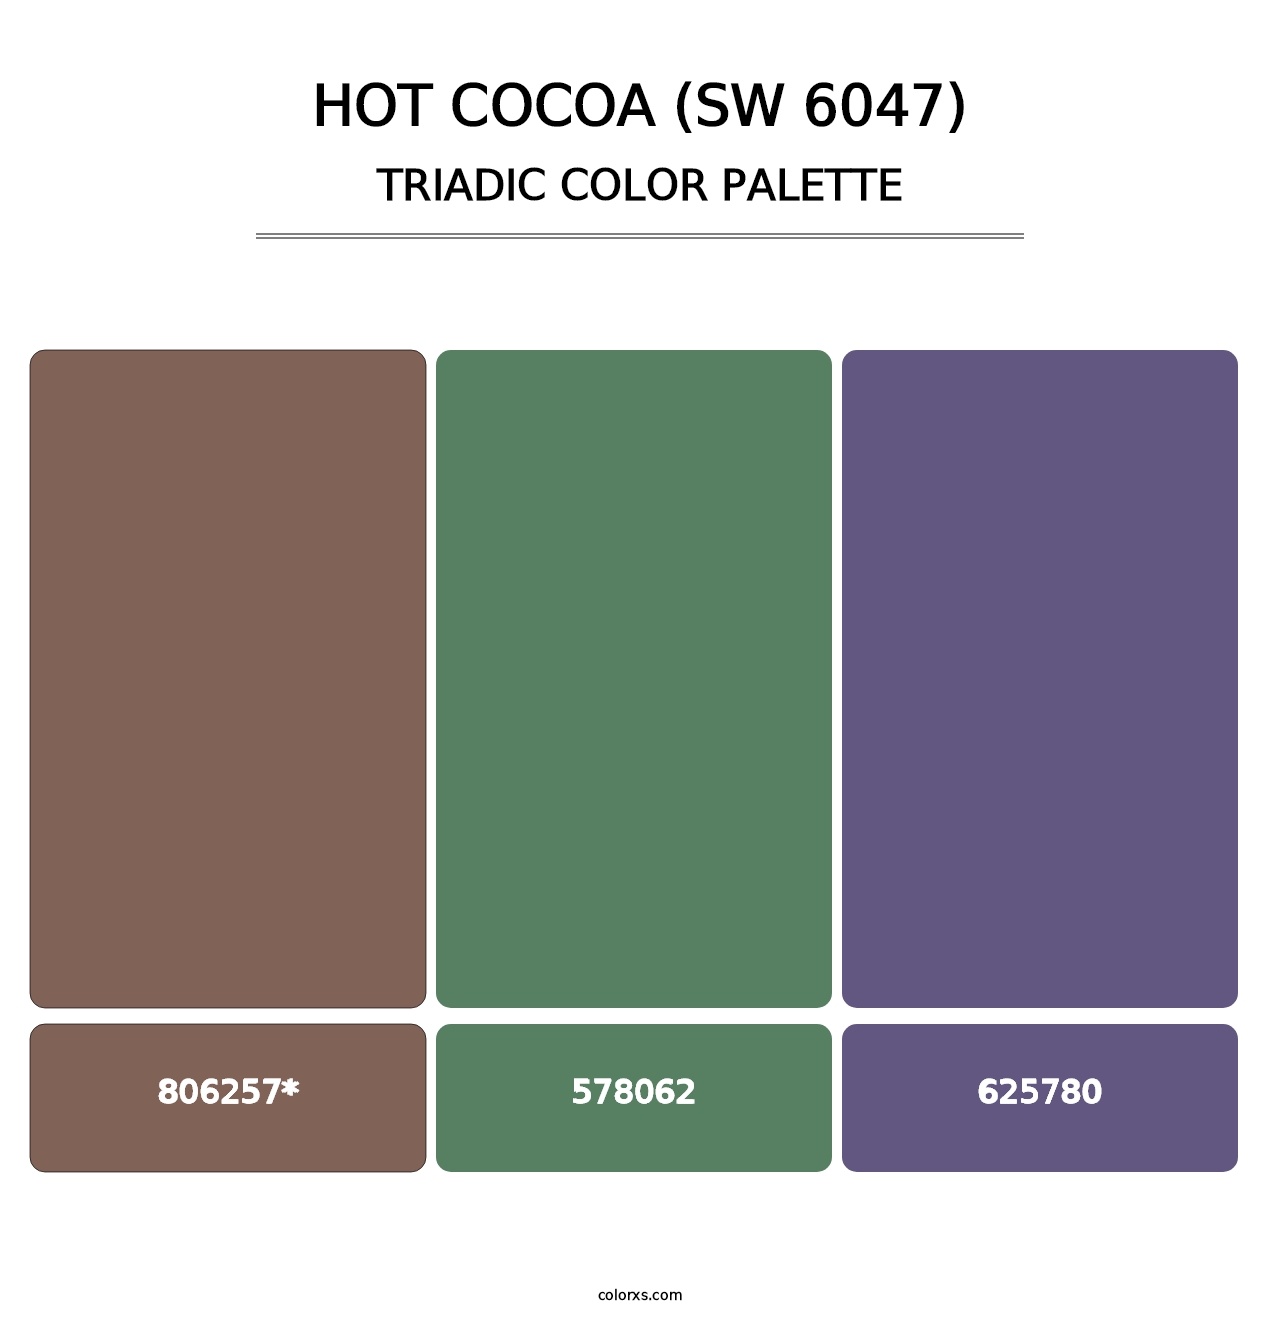 Hot Cocoa (SW 6047) - Triadic Color Palette